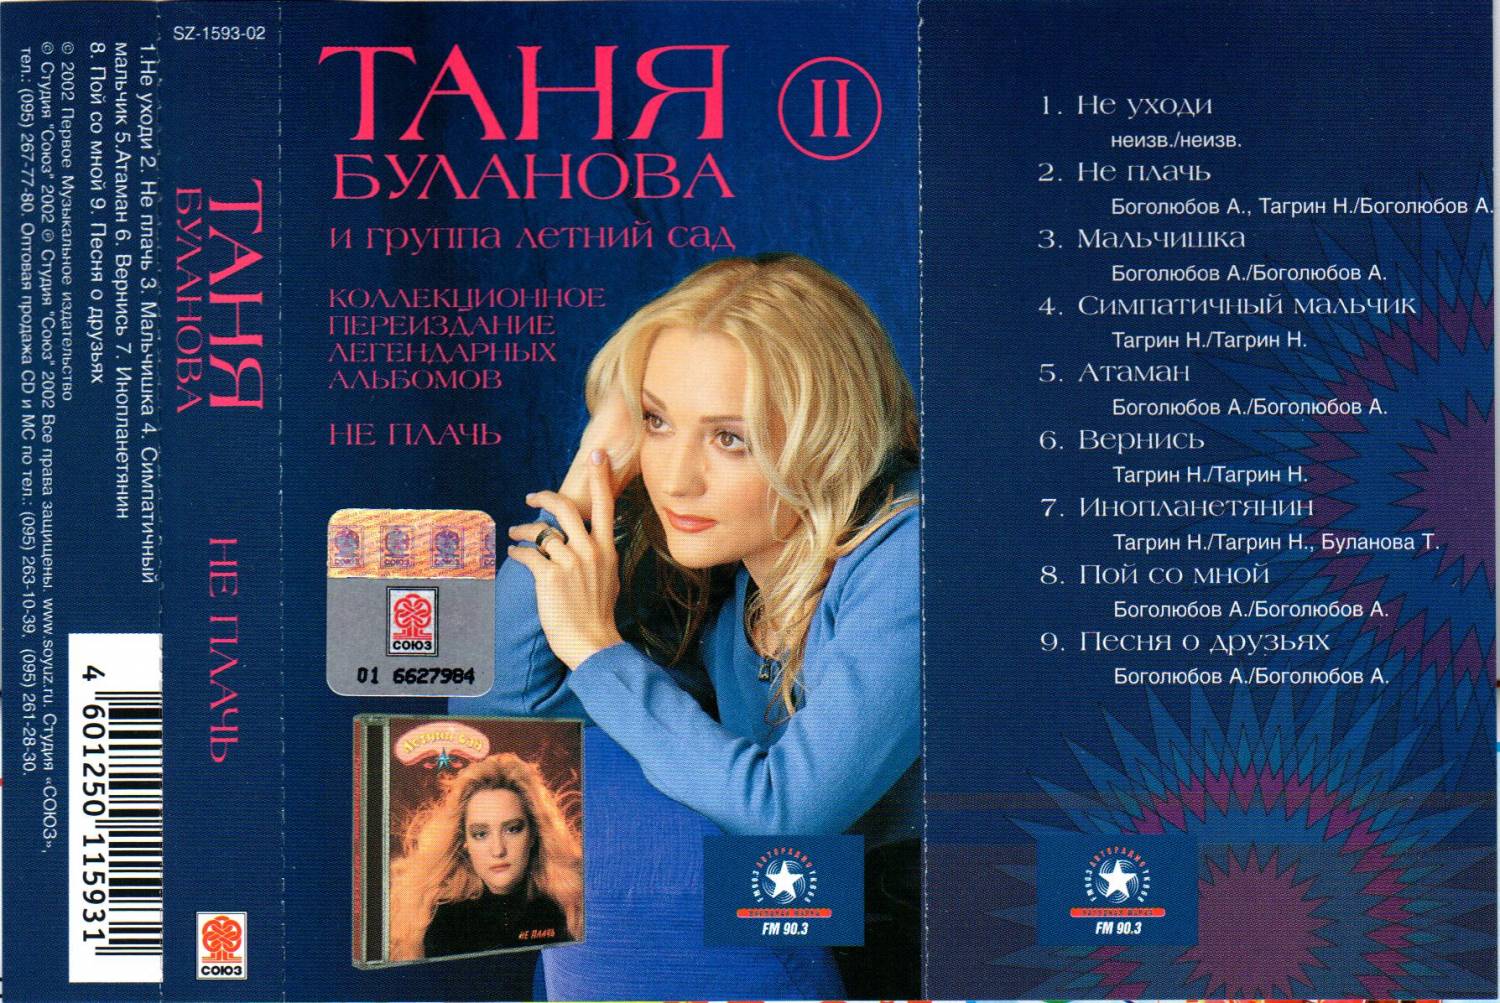 Песня буланова колыбельная булановой. Летний сад Буланова кассета. Таня Буланова 1991. Аудиокассеты Таня Буланова 2001. Буланова 2002.